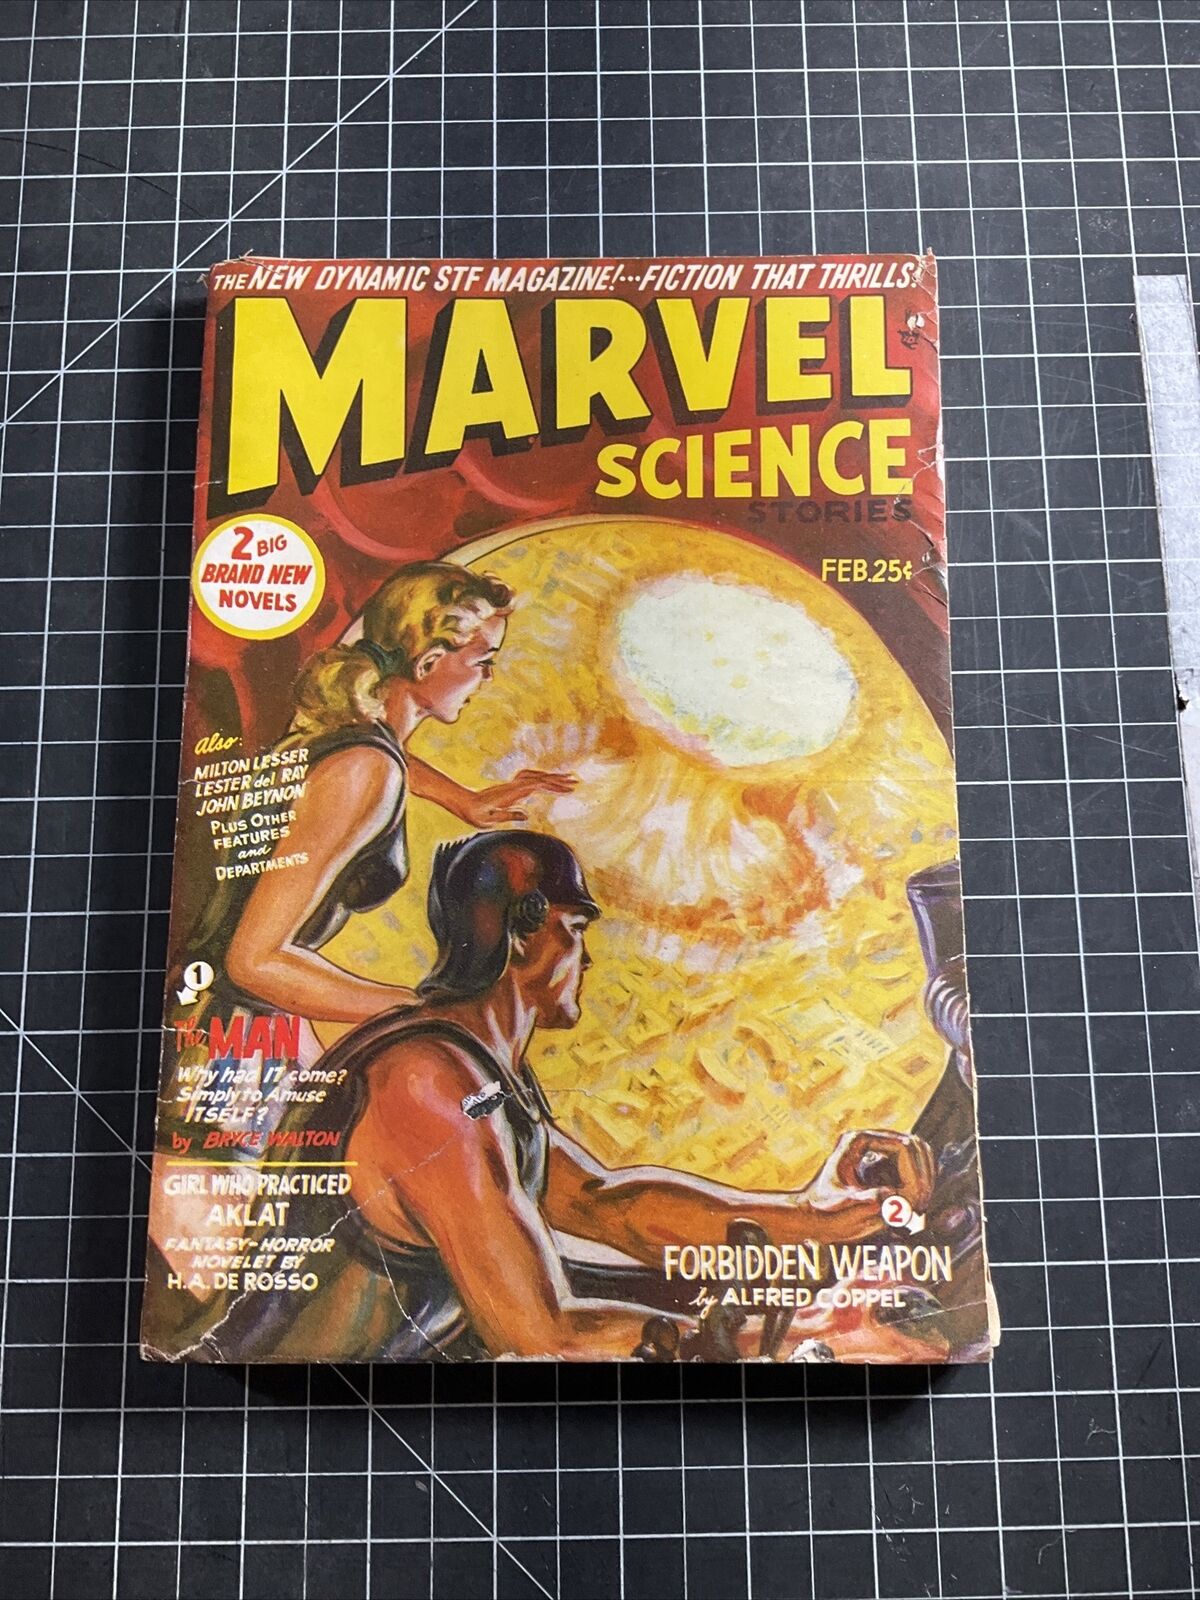 Marvel Science Stories Vol. 3 #2, February 1951 Sci-Fi Pulp Magazine